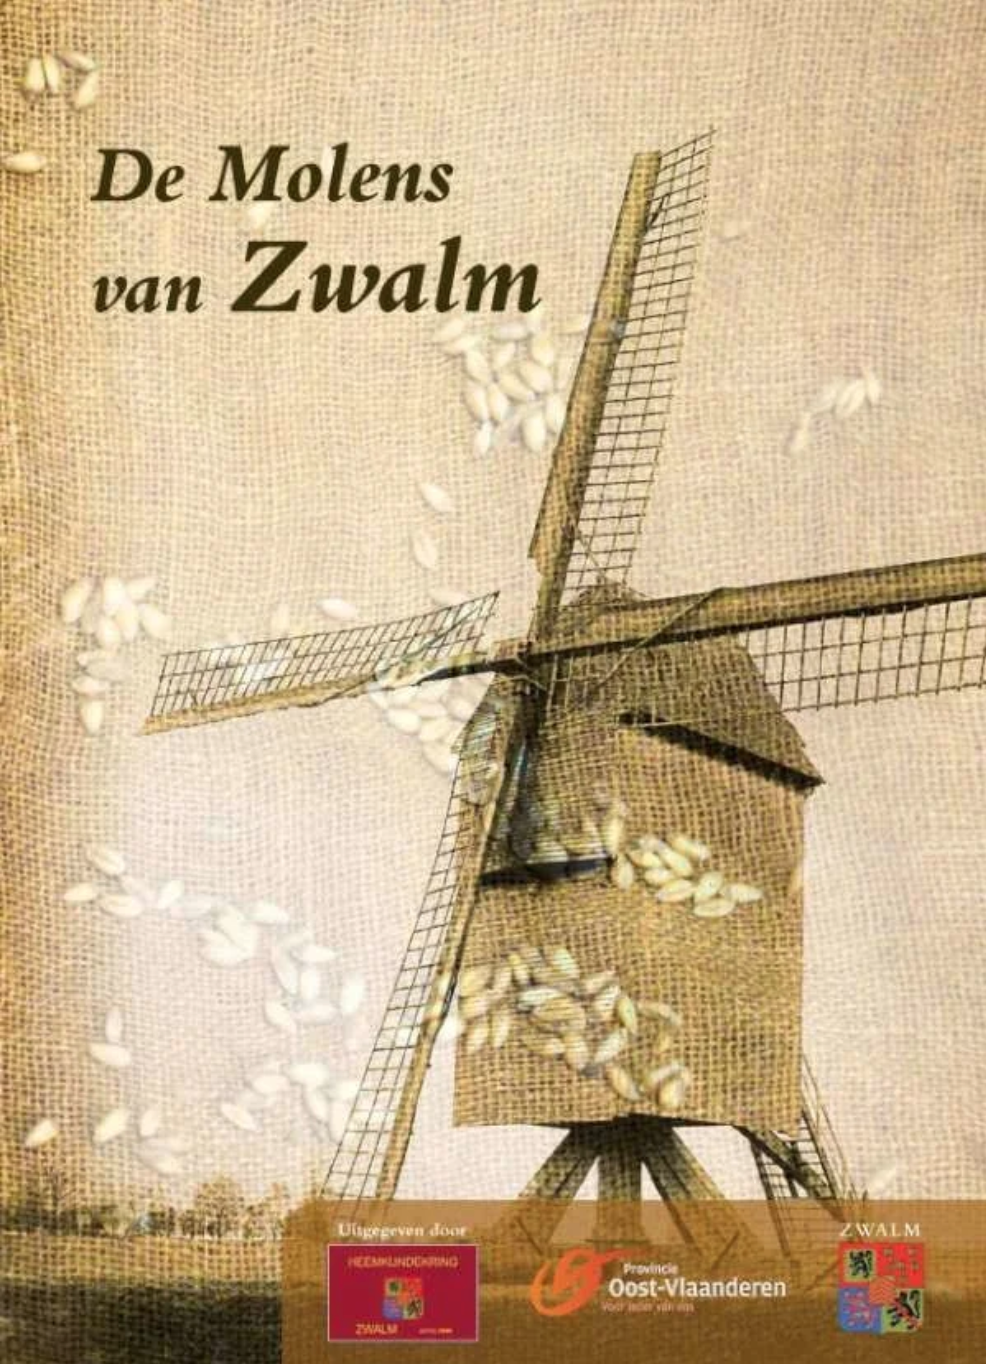 De molens van Zwalm